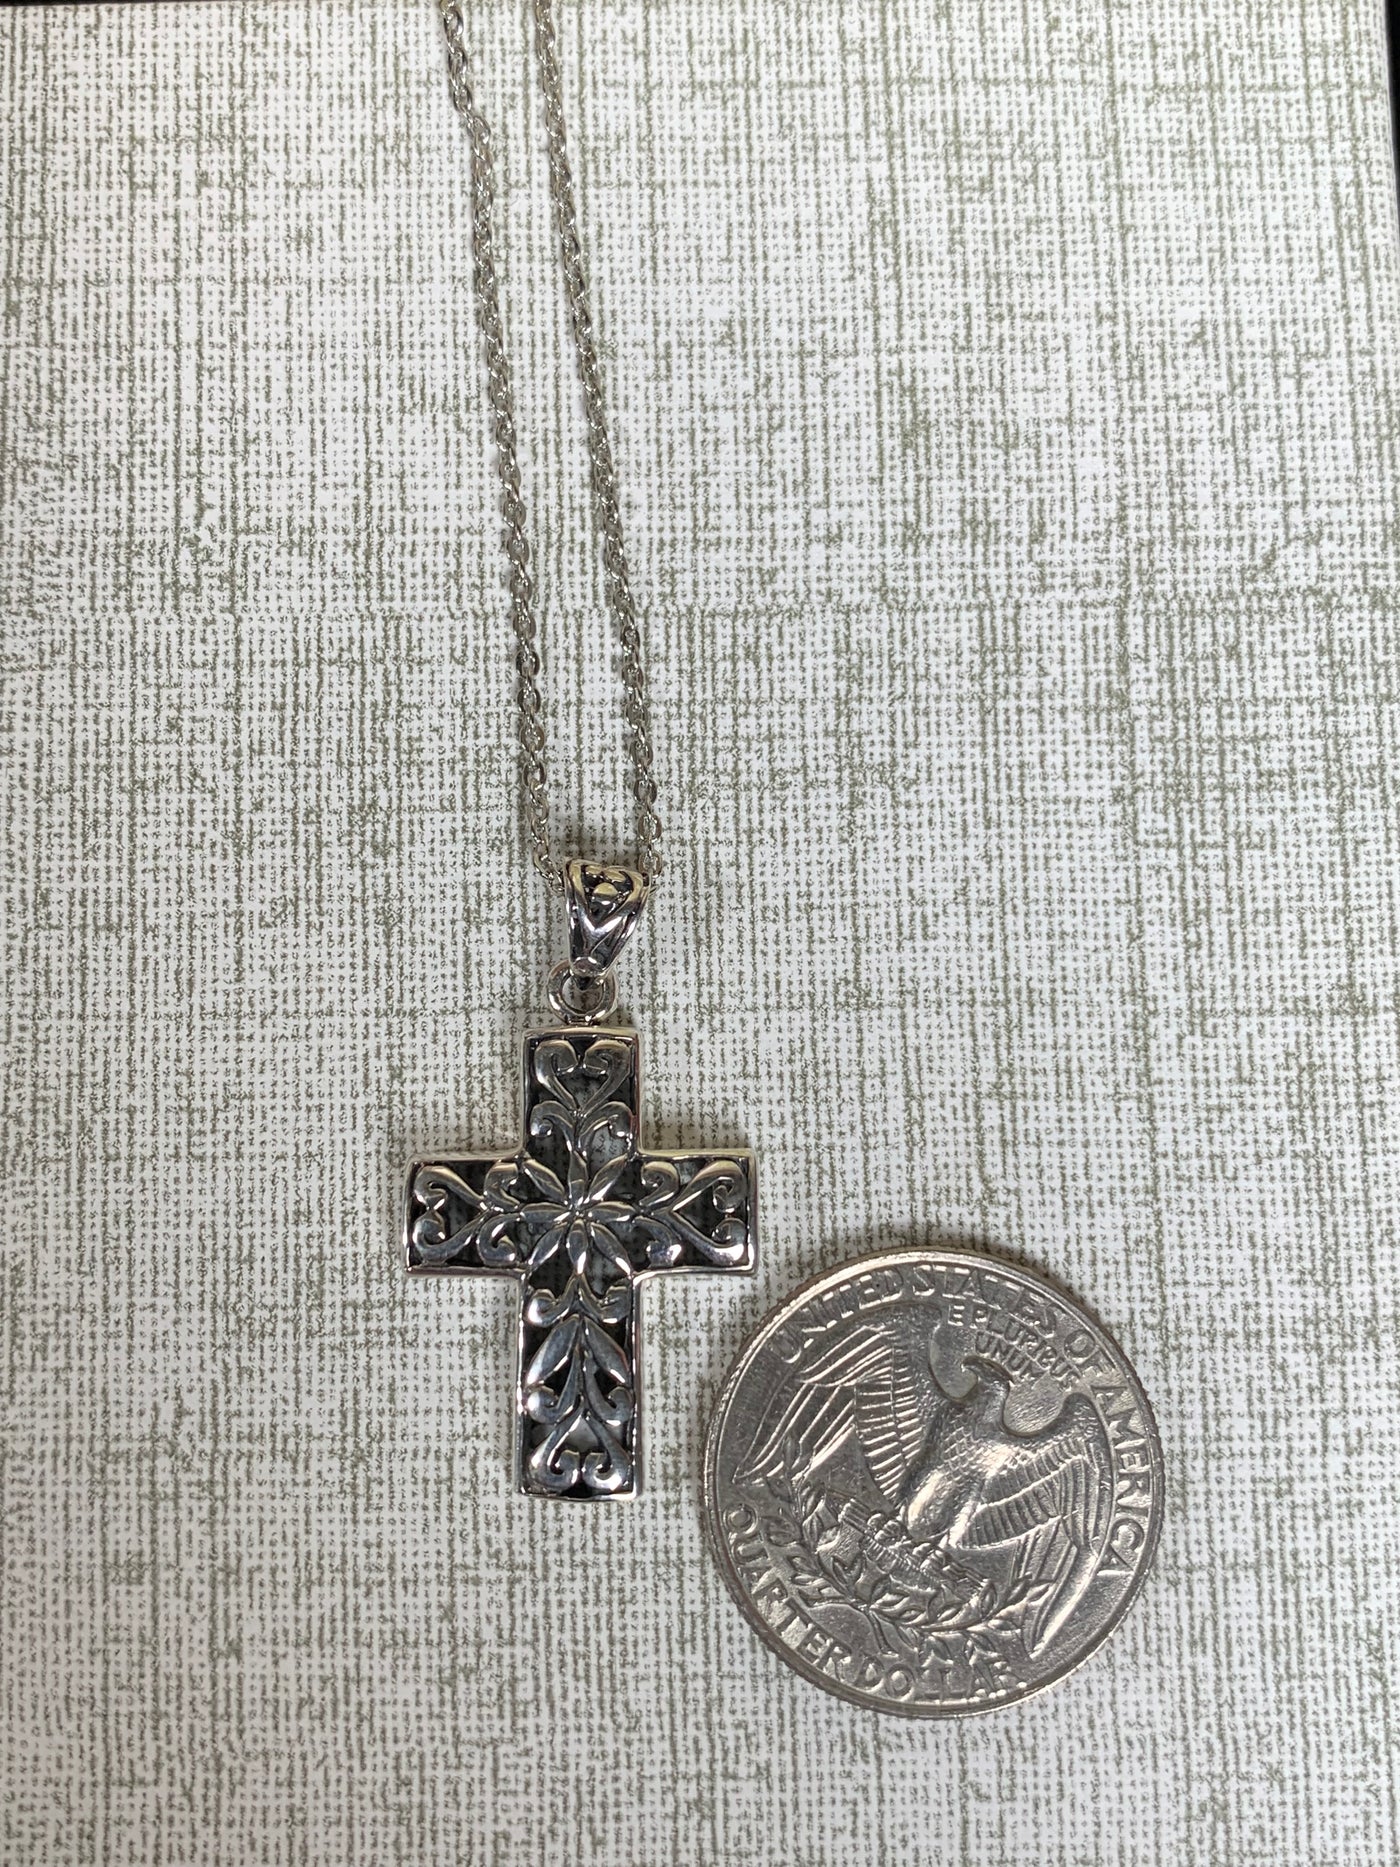 Filigree Design Cross Pendant in Sterling Silver